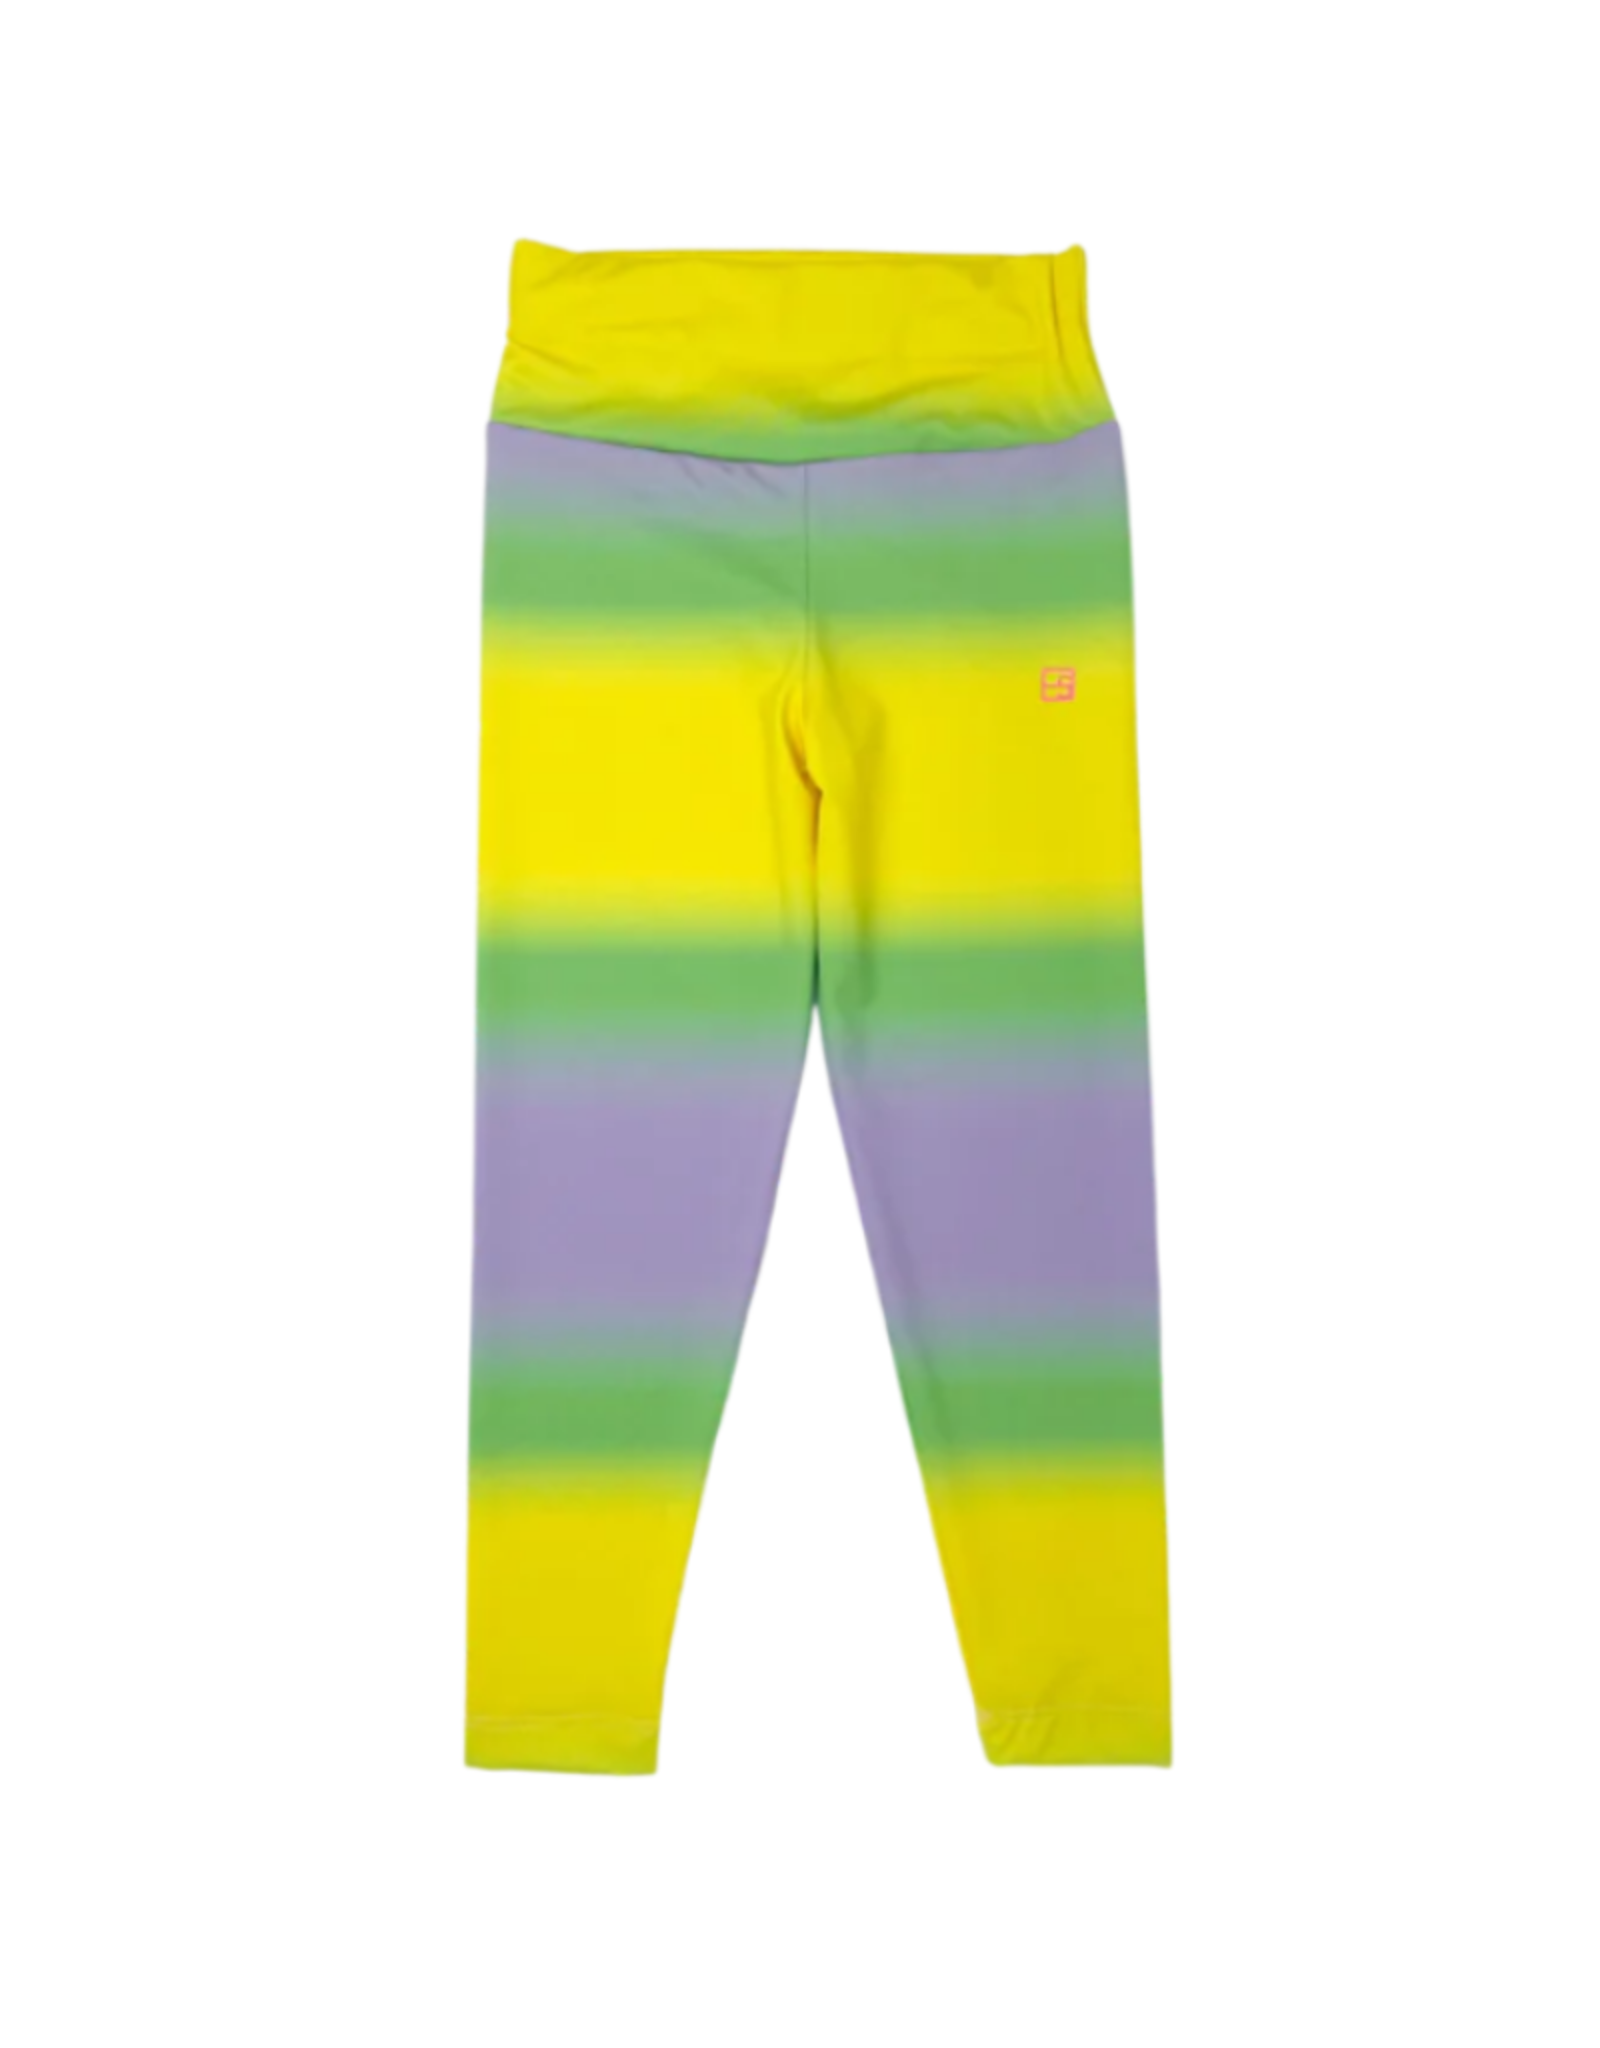 https://cdn.shoplightspeed.com/shops/629241/files/51543488/1600x2048x1/set-hailey-highwaist-mardi-gras-leggings.jpg